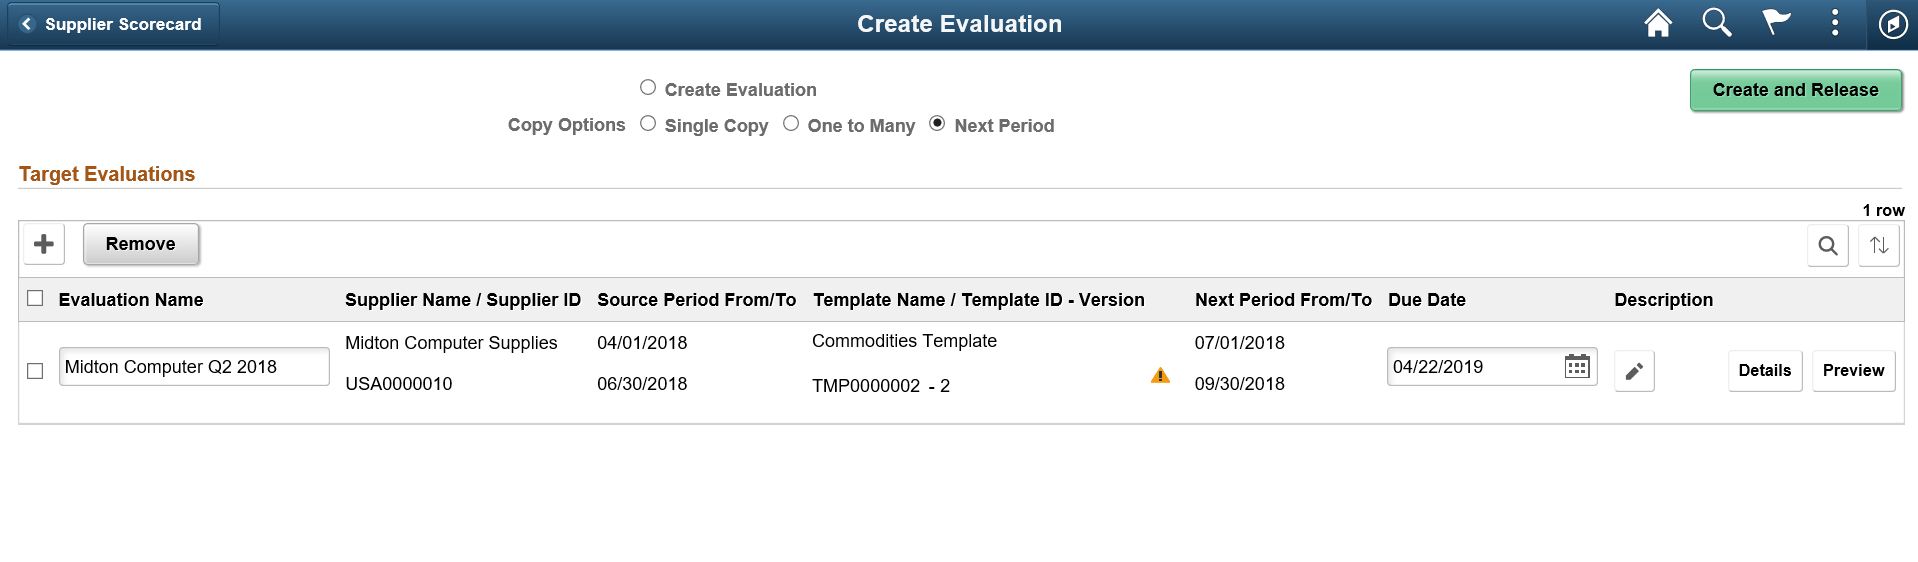 Create Evaluation page - Next Period Copy Option